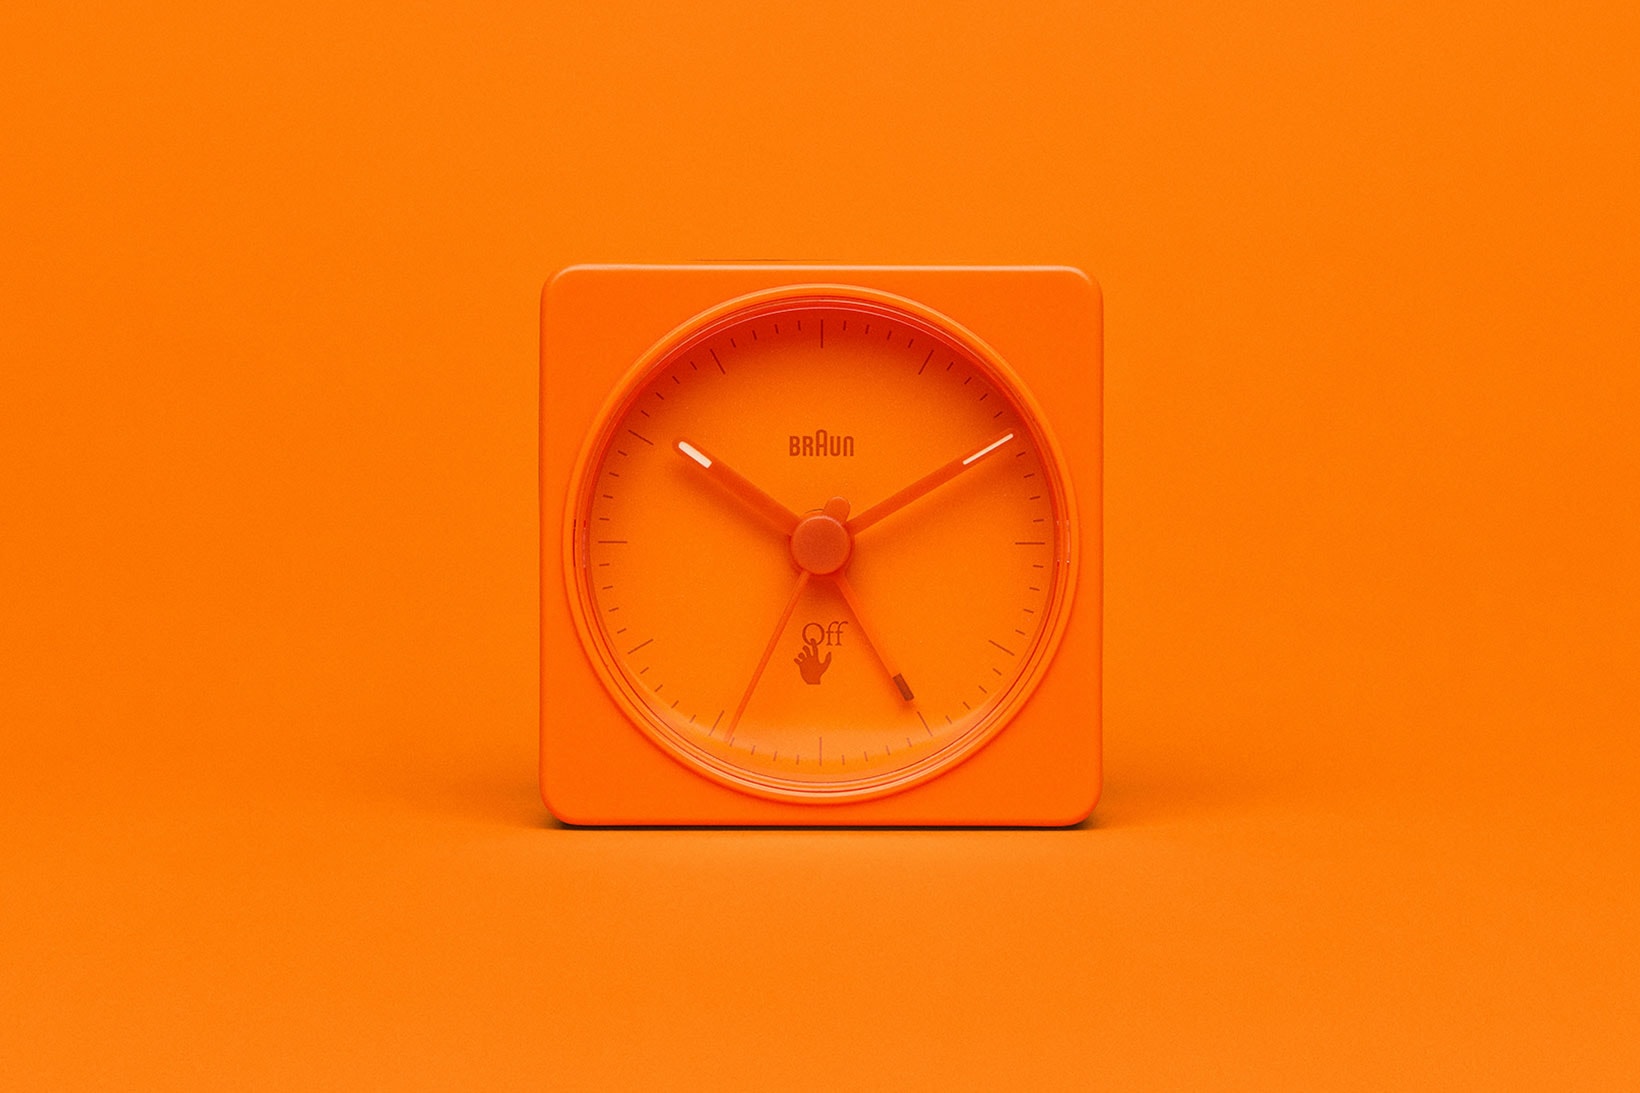 off-white braun alarm clocks collaboration home decor accessories orange front